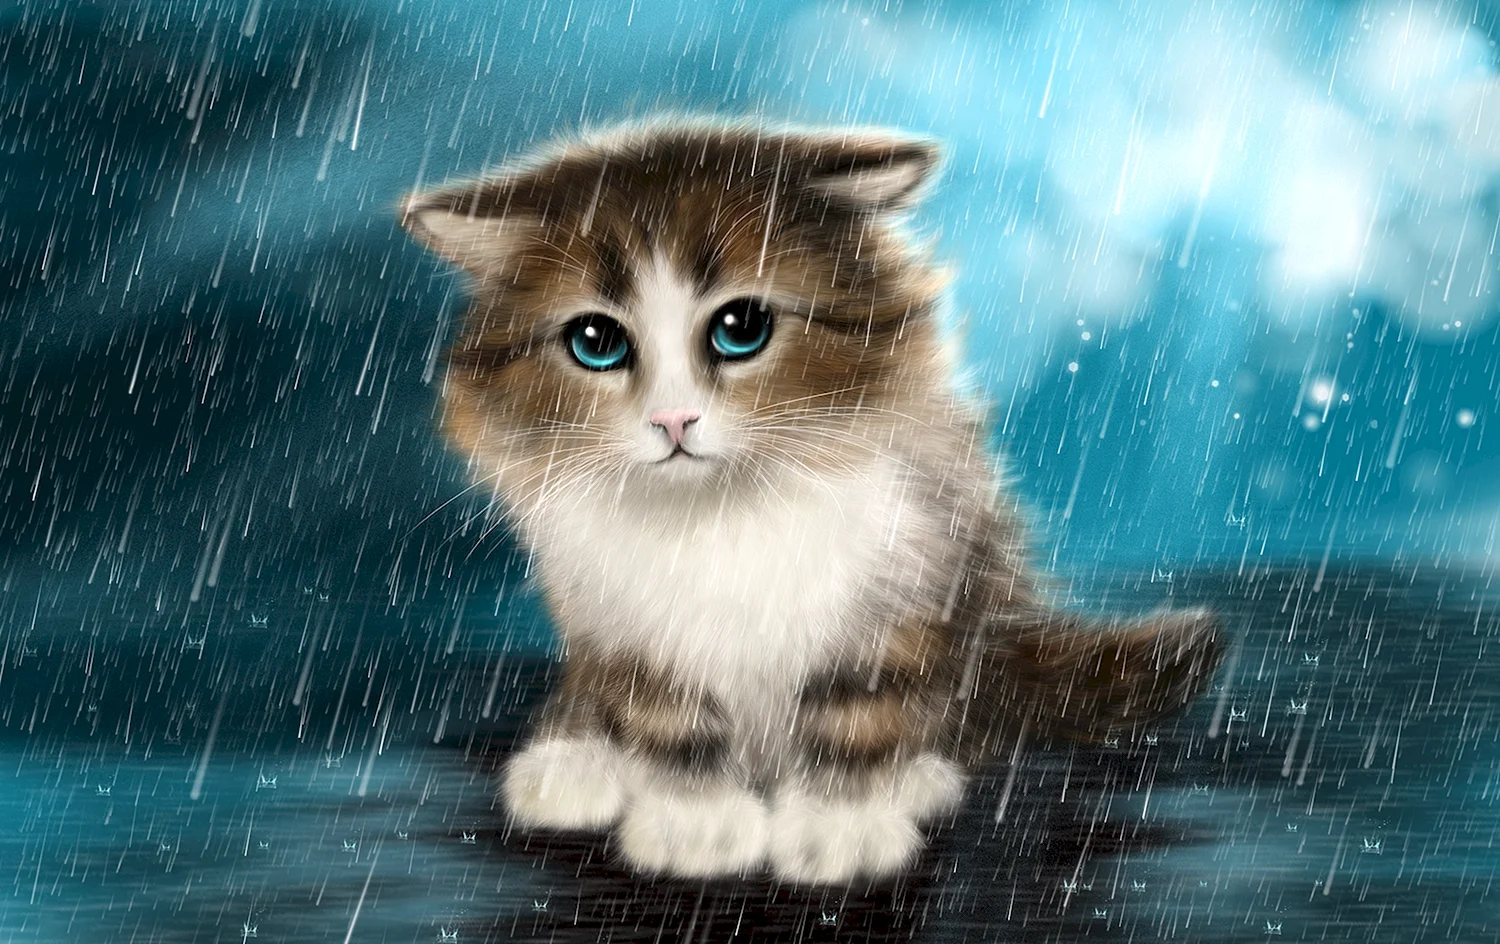 Кот под дождем